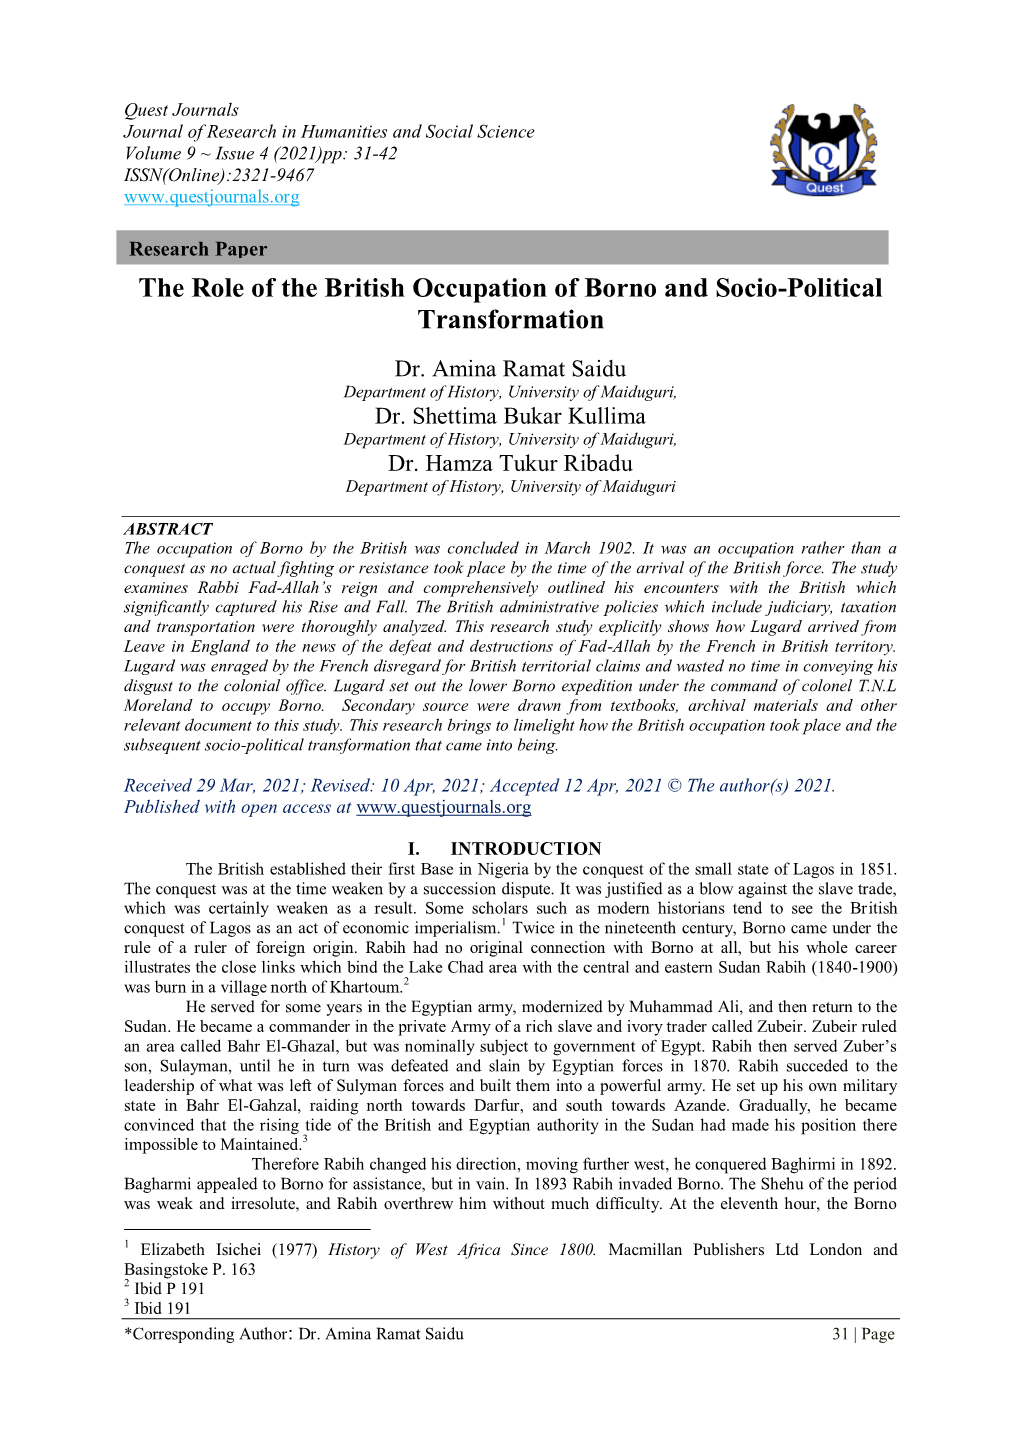 The Role of the British Occupation of Borno and Socio-Political Transformation